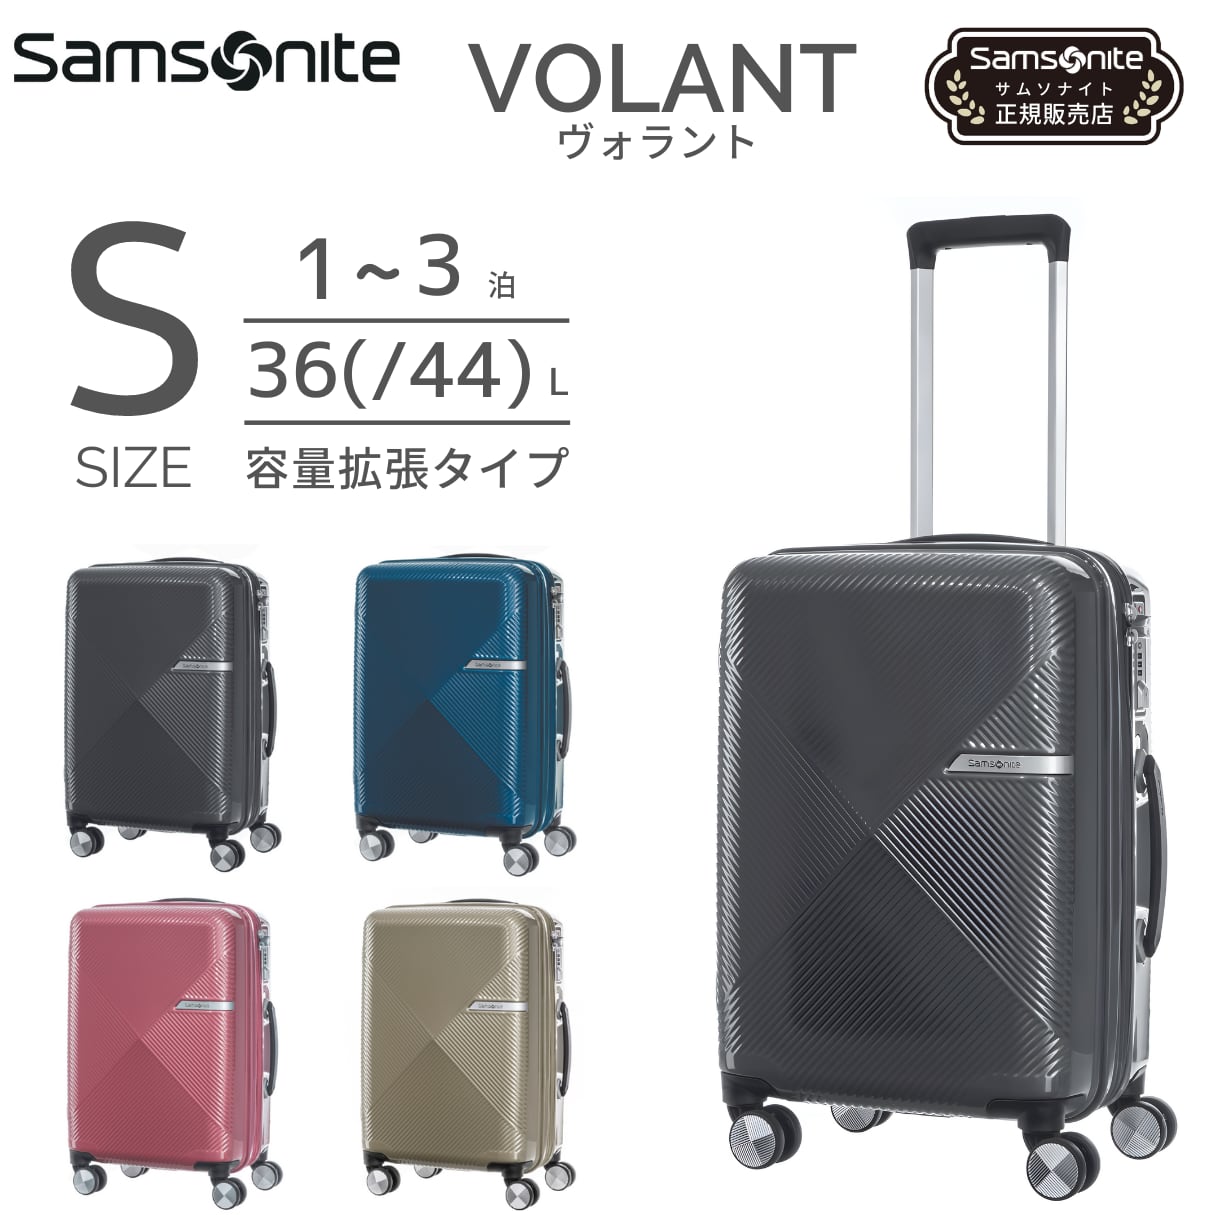 SAMSONITE＞VOLANT SPINNER 55cm EXP スーツケース （サムソナイト